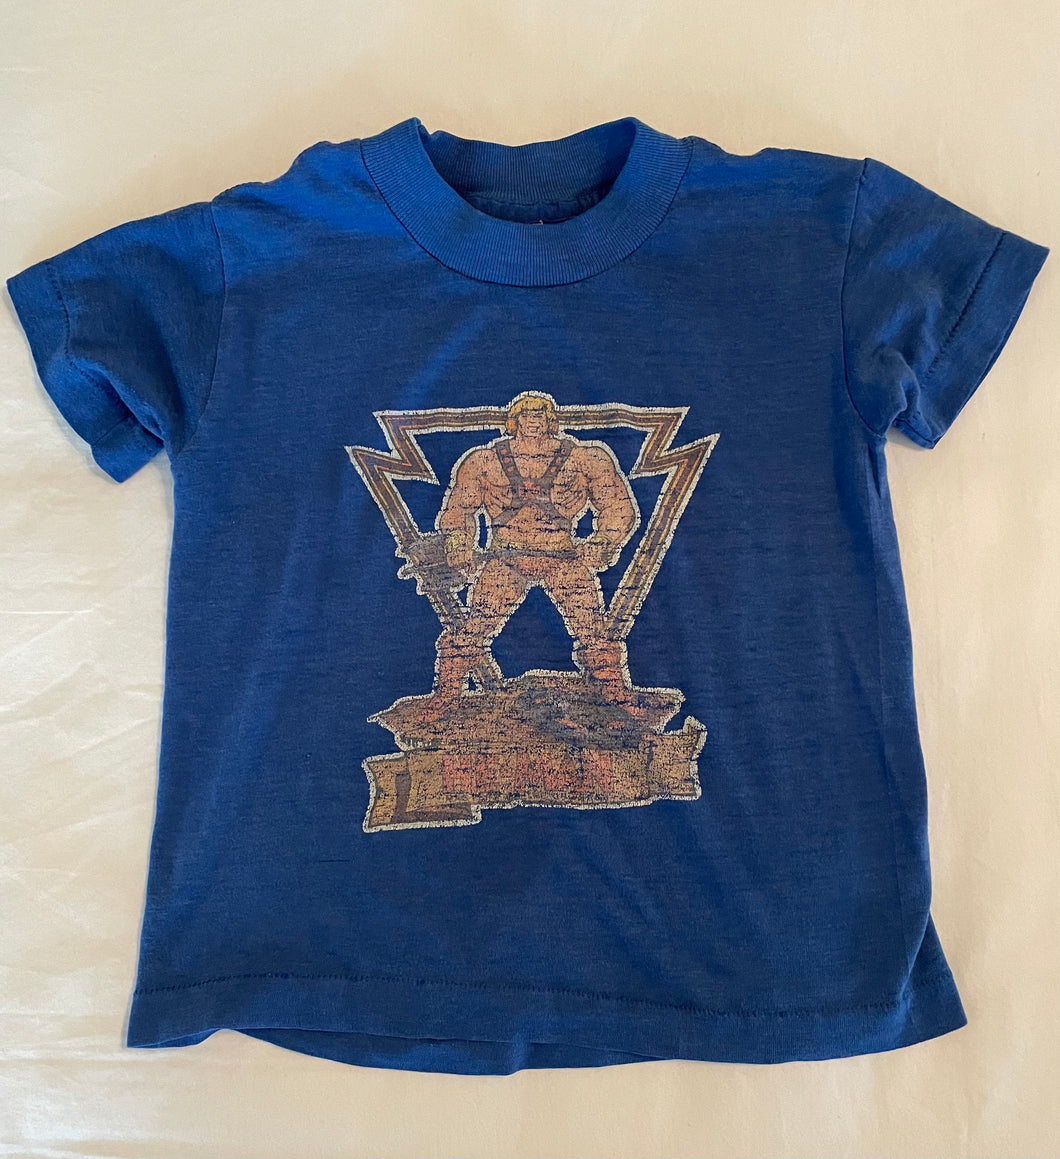 Kids Original 1970’s He-man Shirt